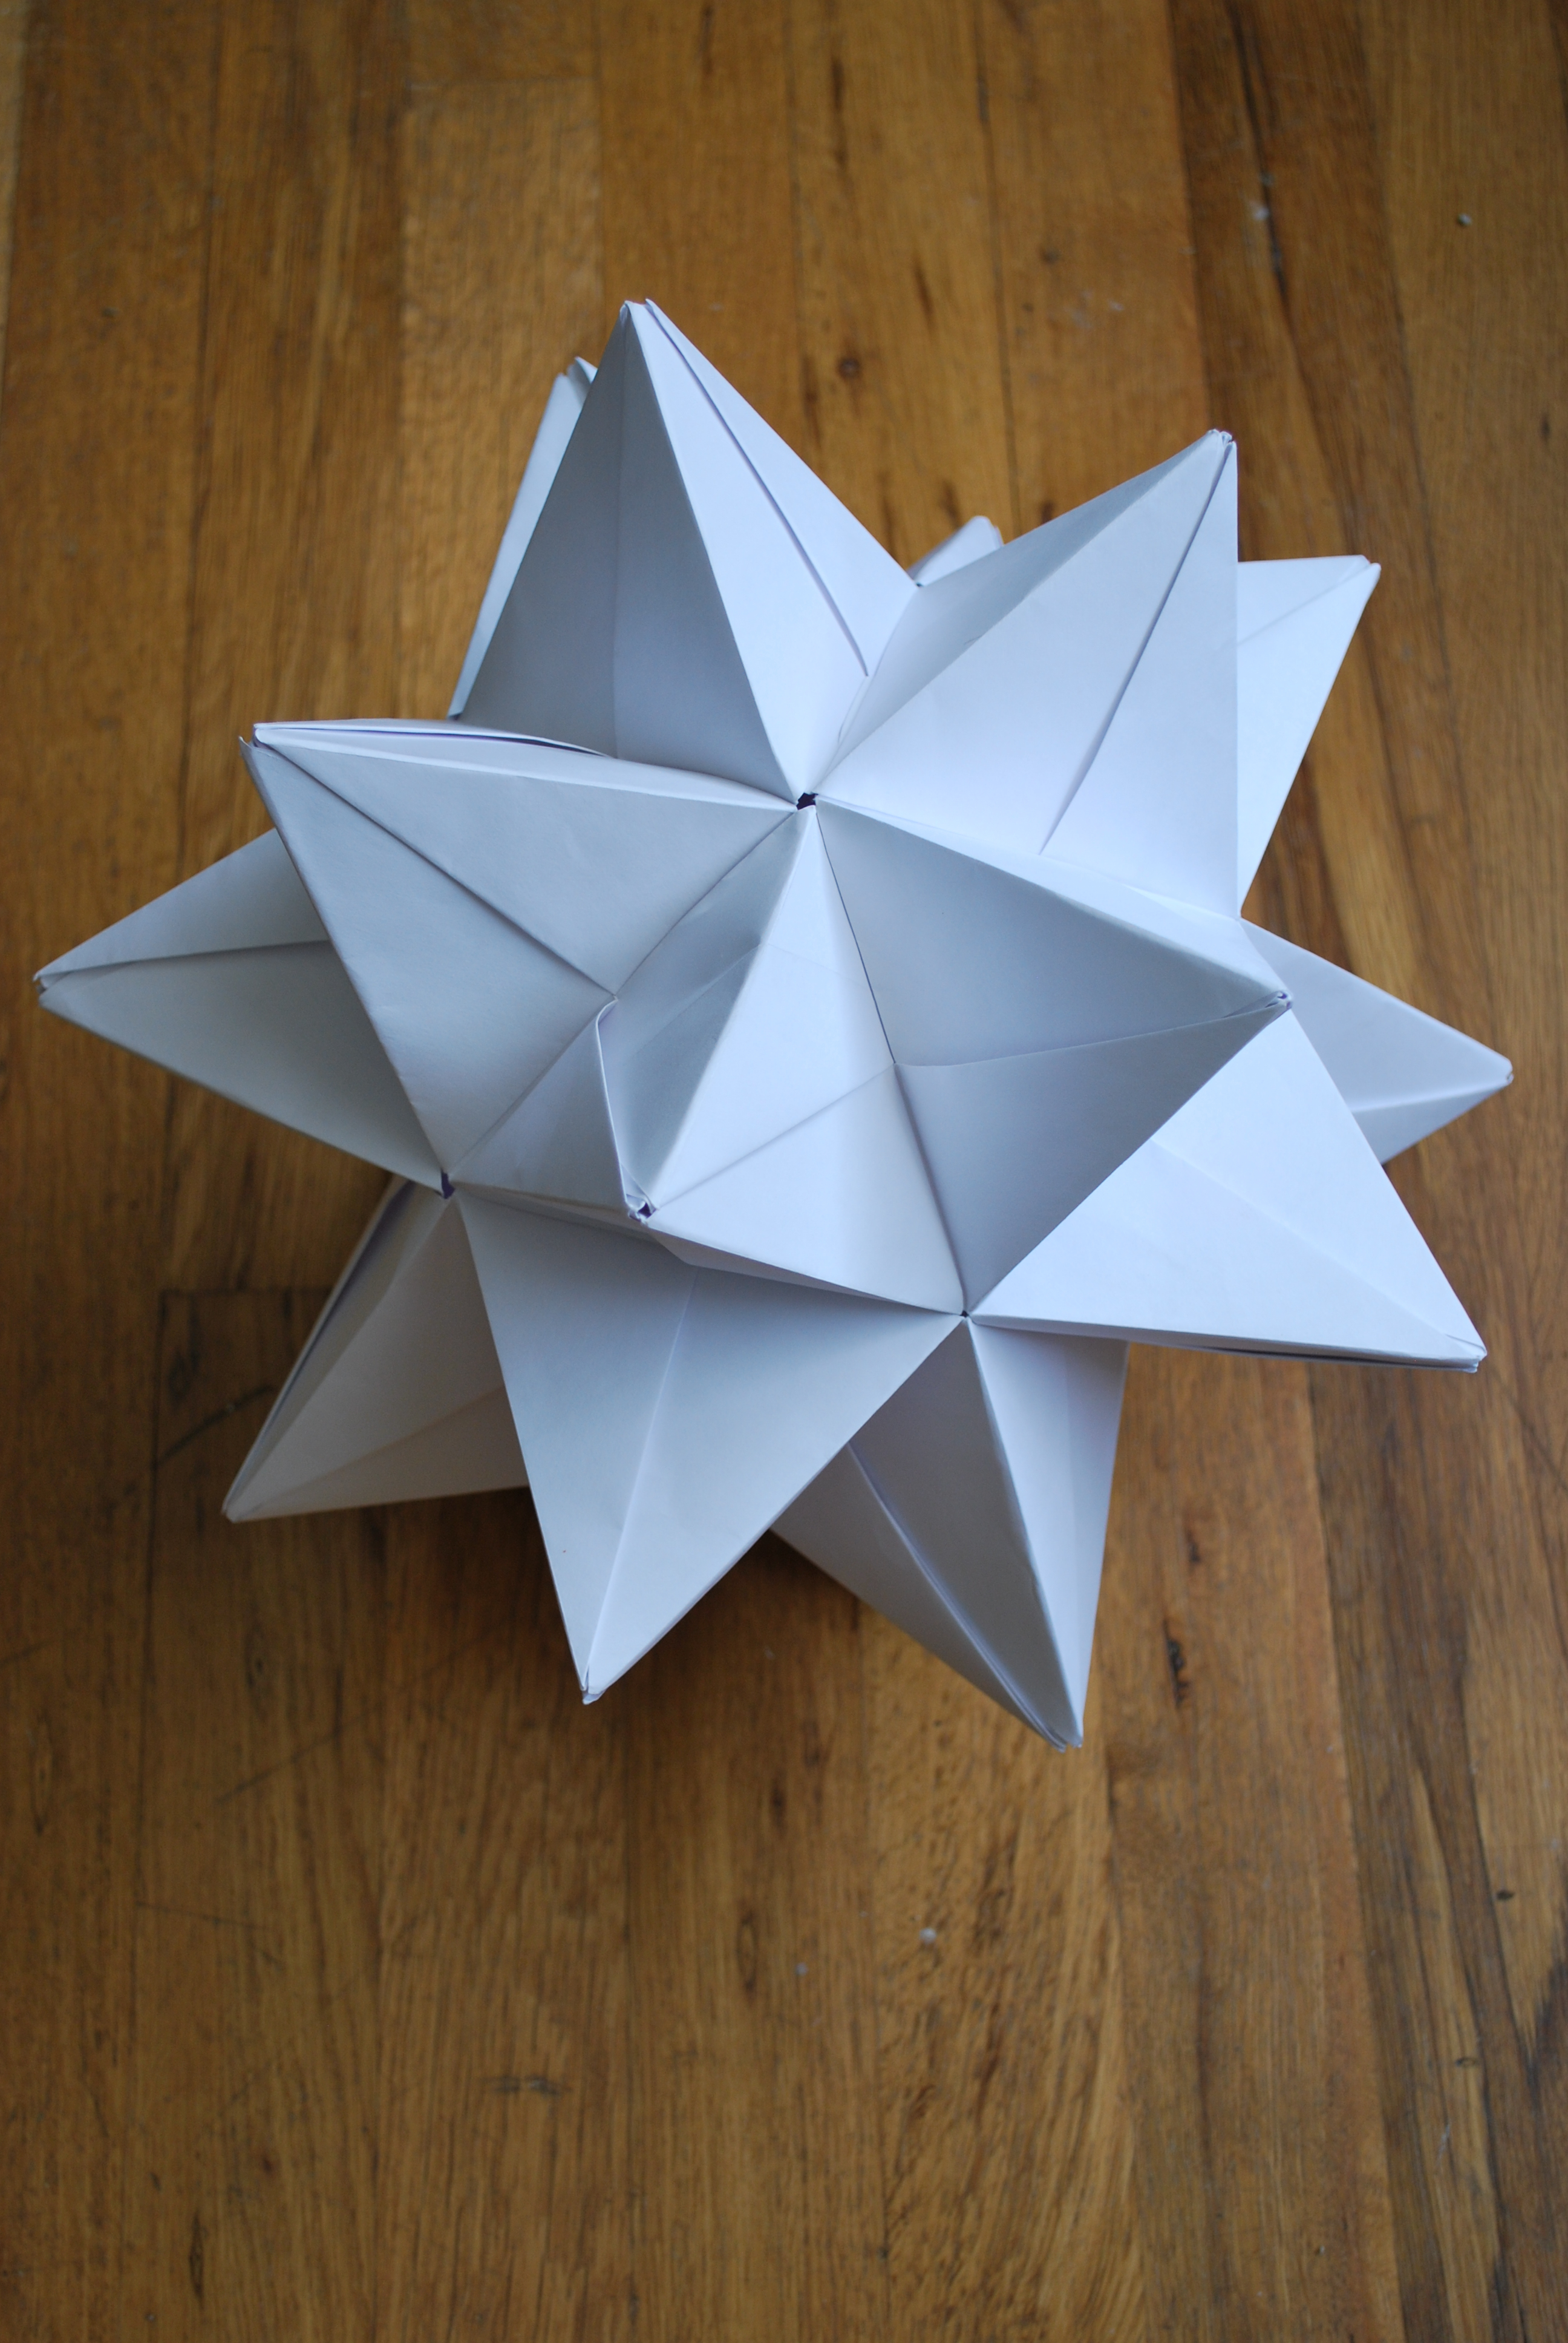 How To Make 3D Star Origami Origami Star I Create Stuff Sometimes